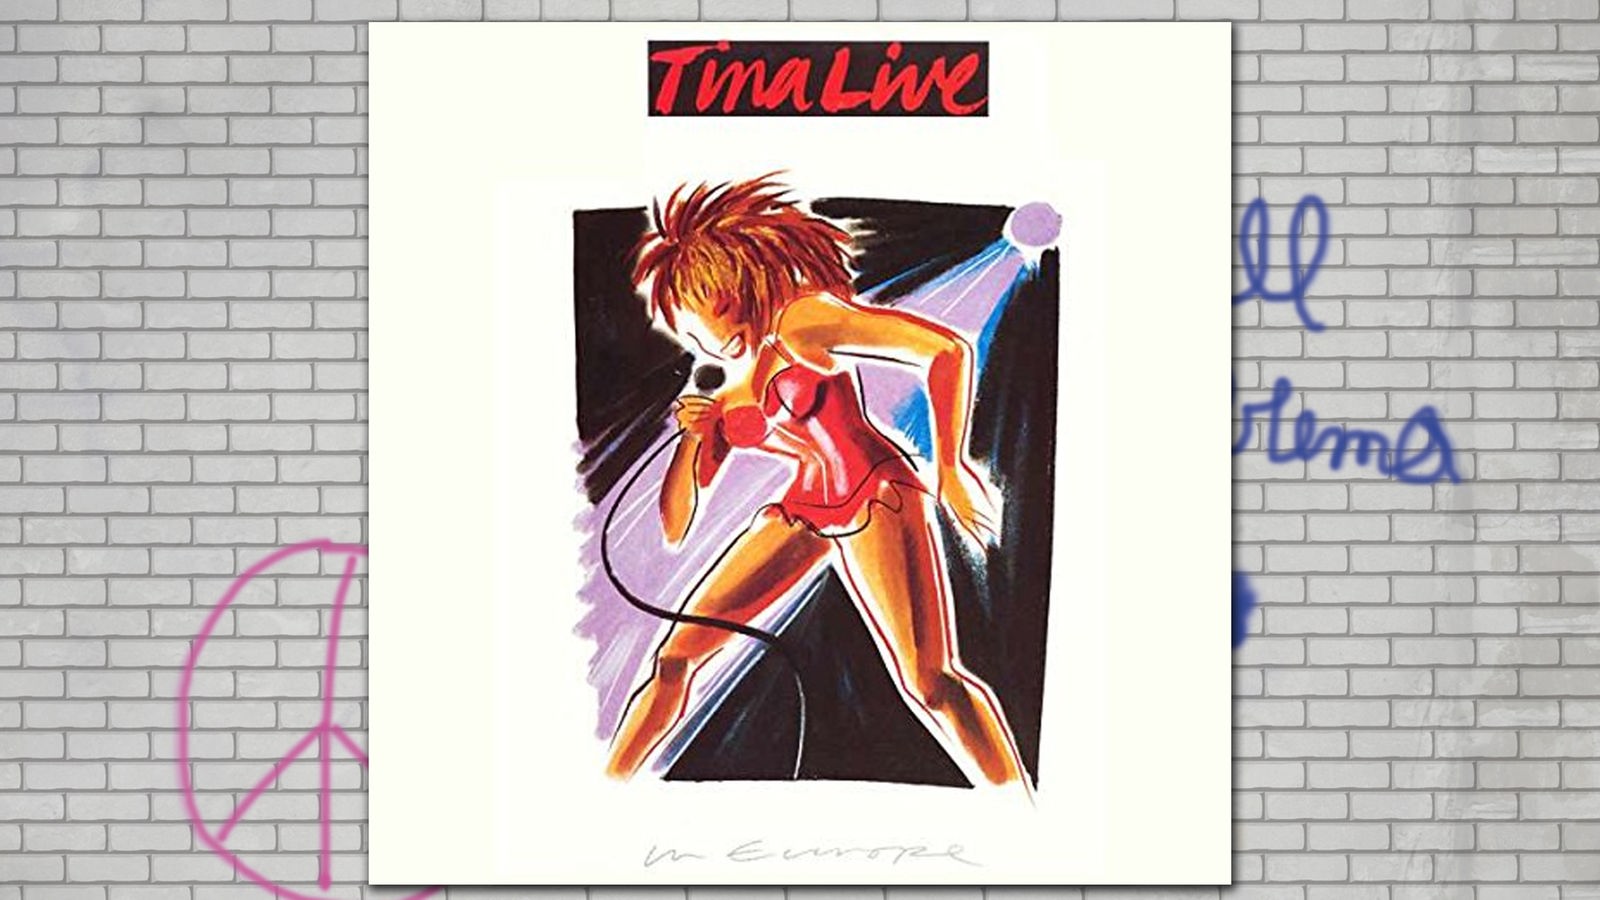 LP Cover Tina Turner "Tina live in Europe"